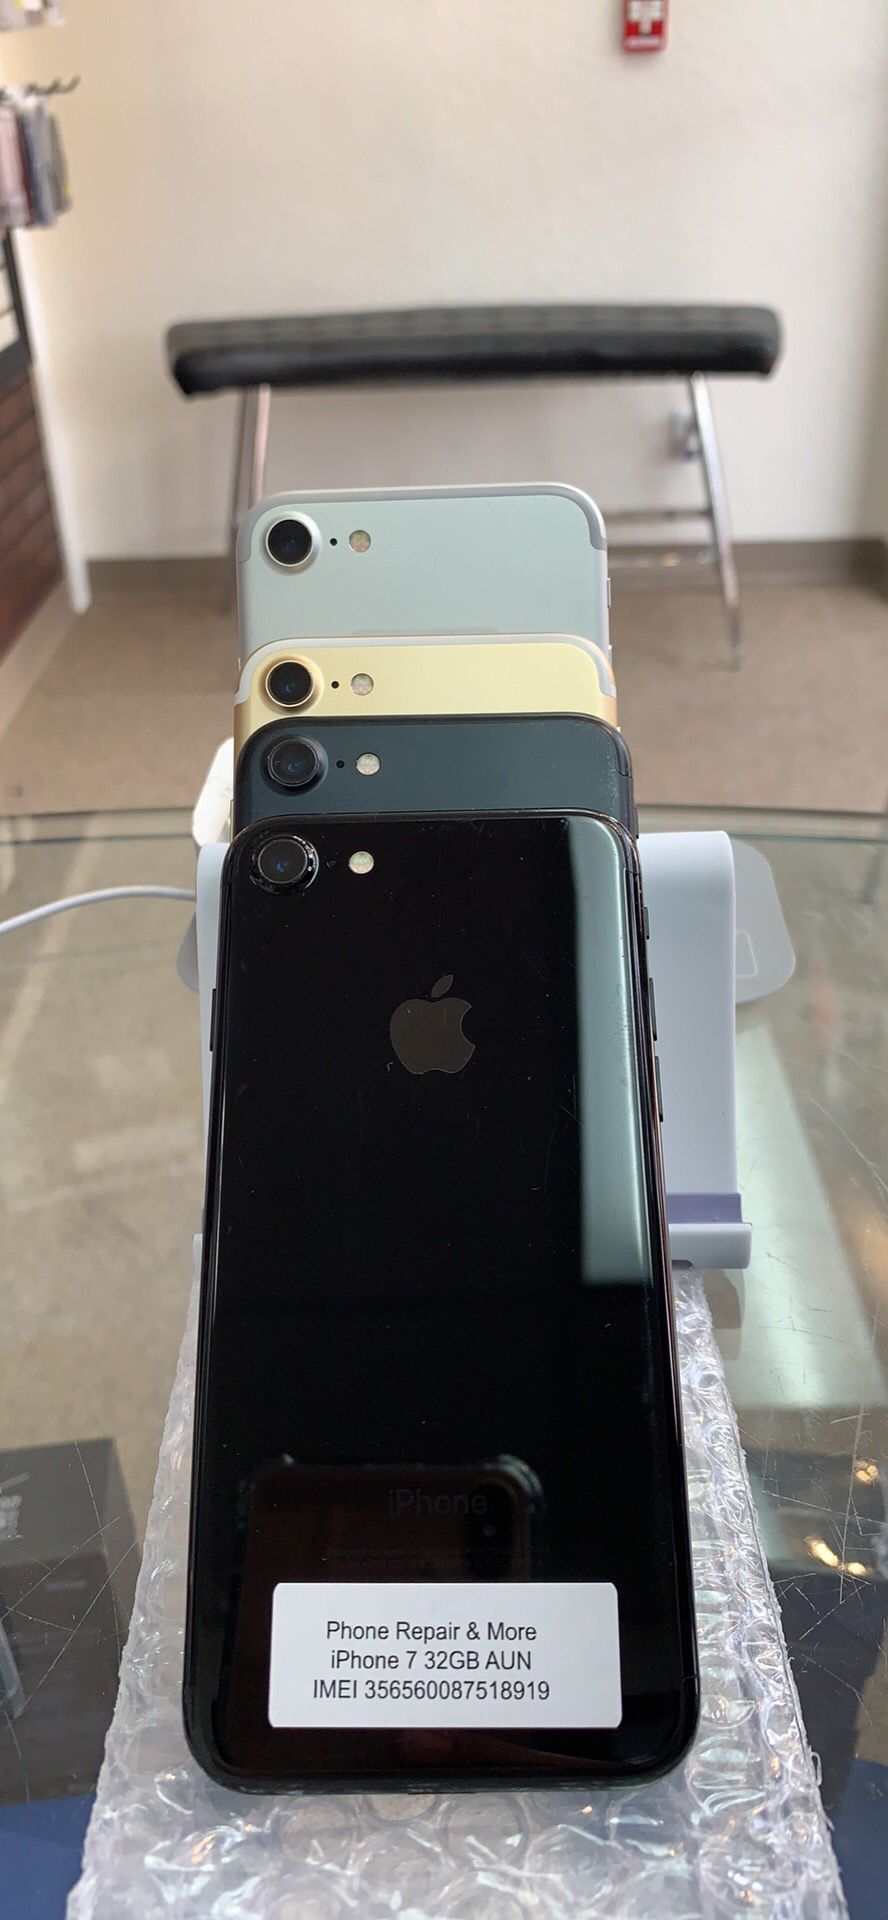 iPhone 7 (32GB ) Factory Unlocked | 30 Days warranty | Like New